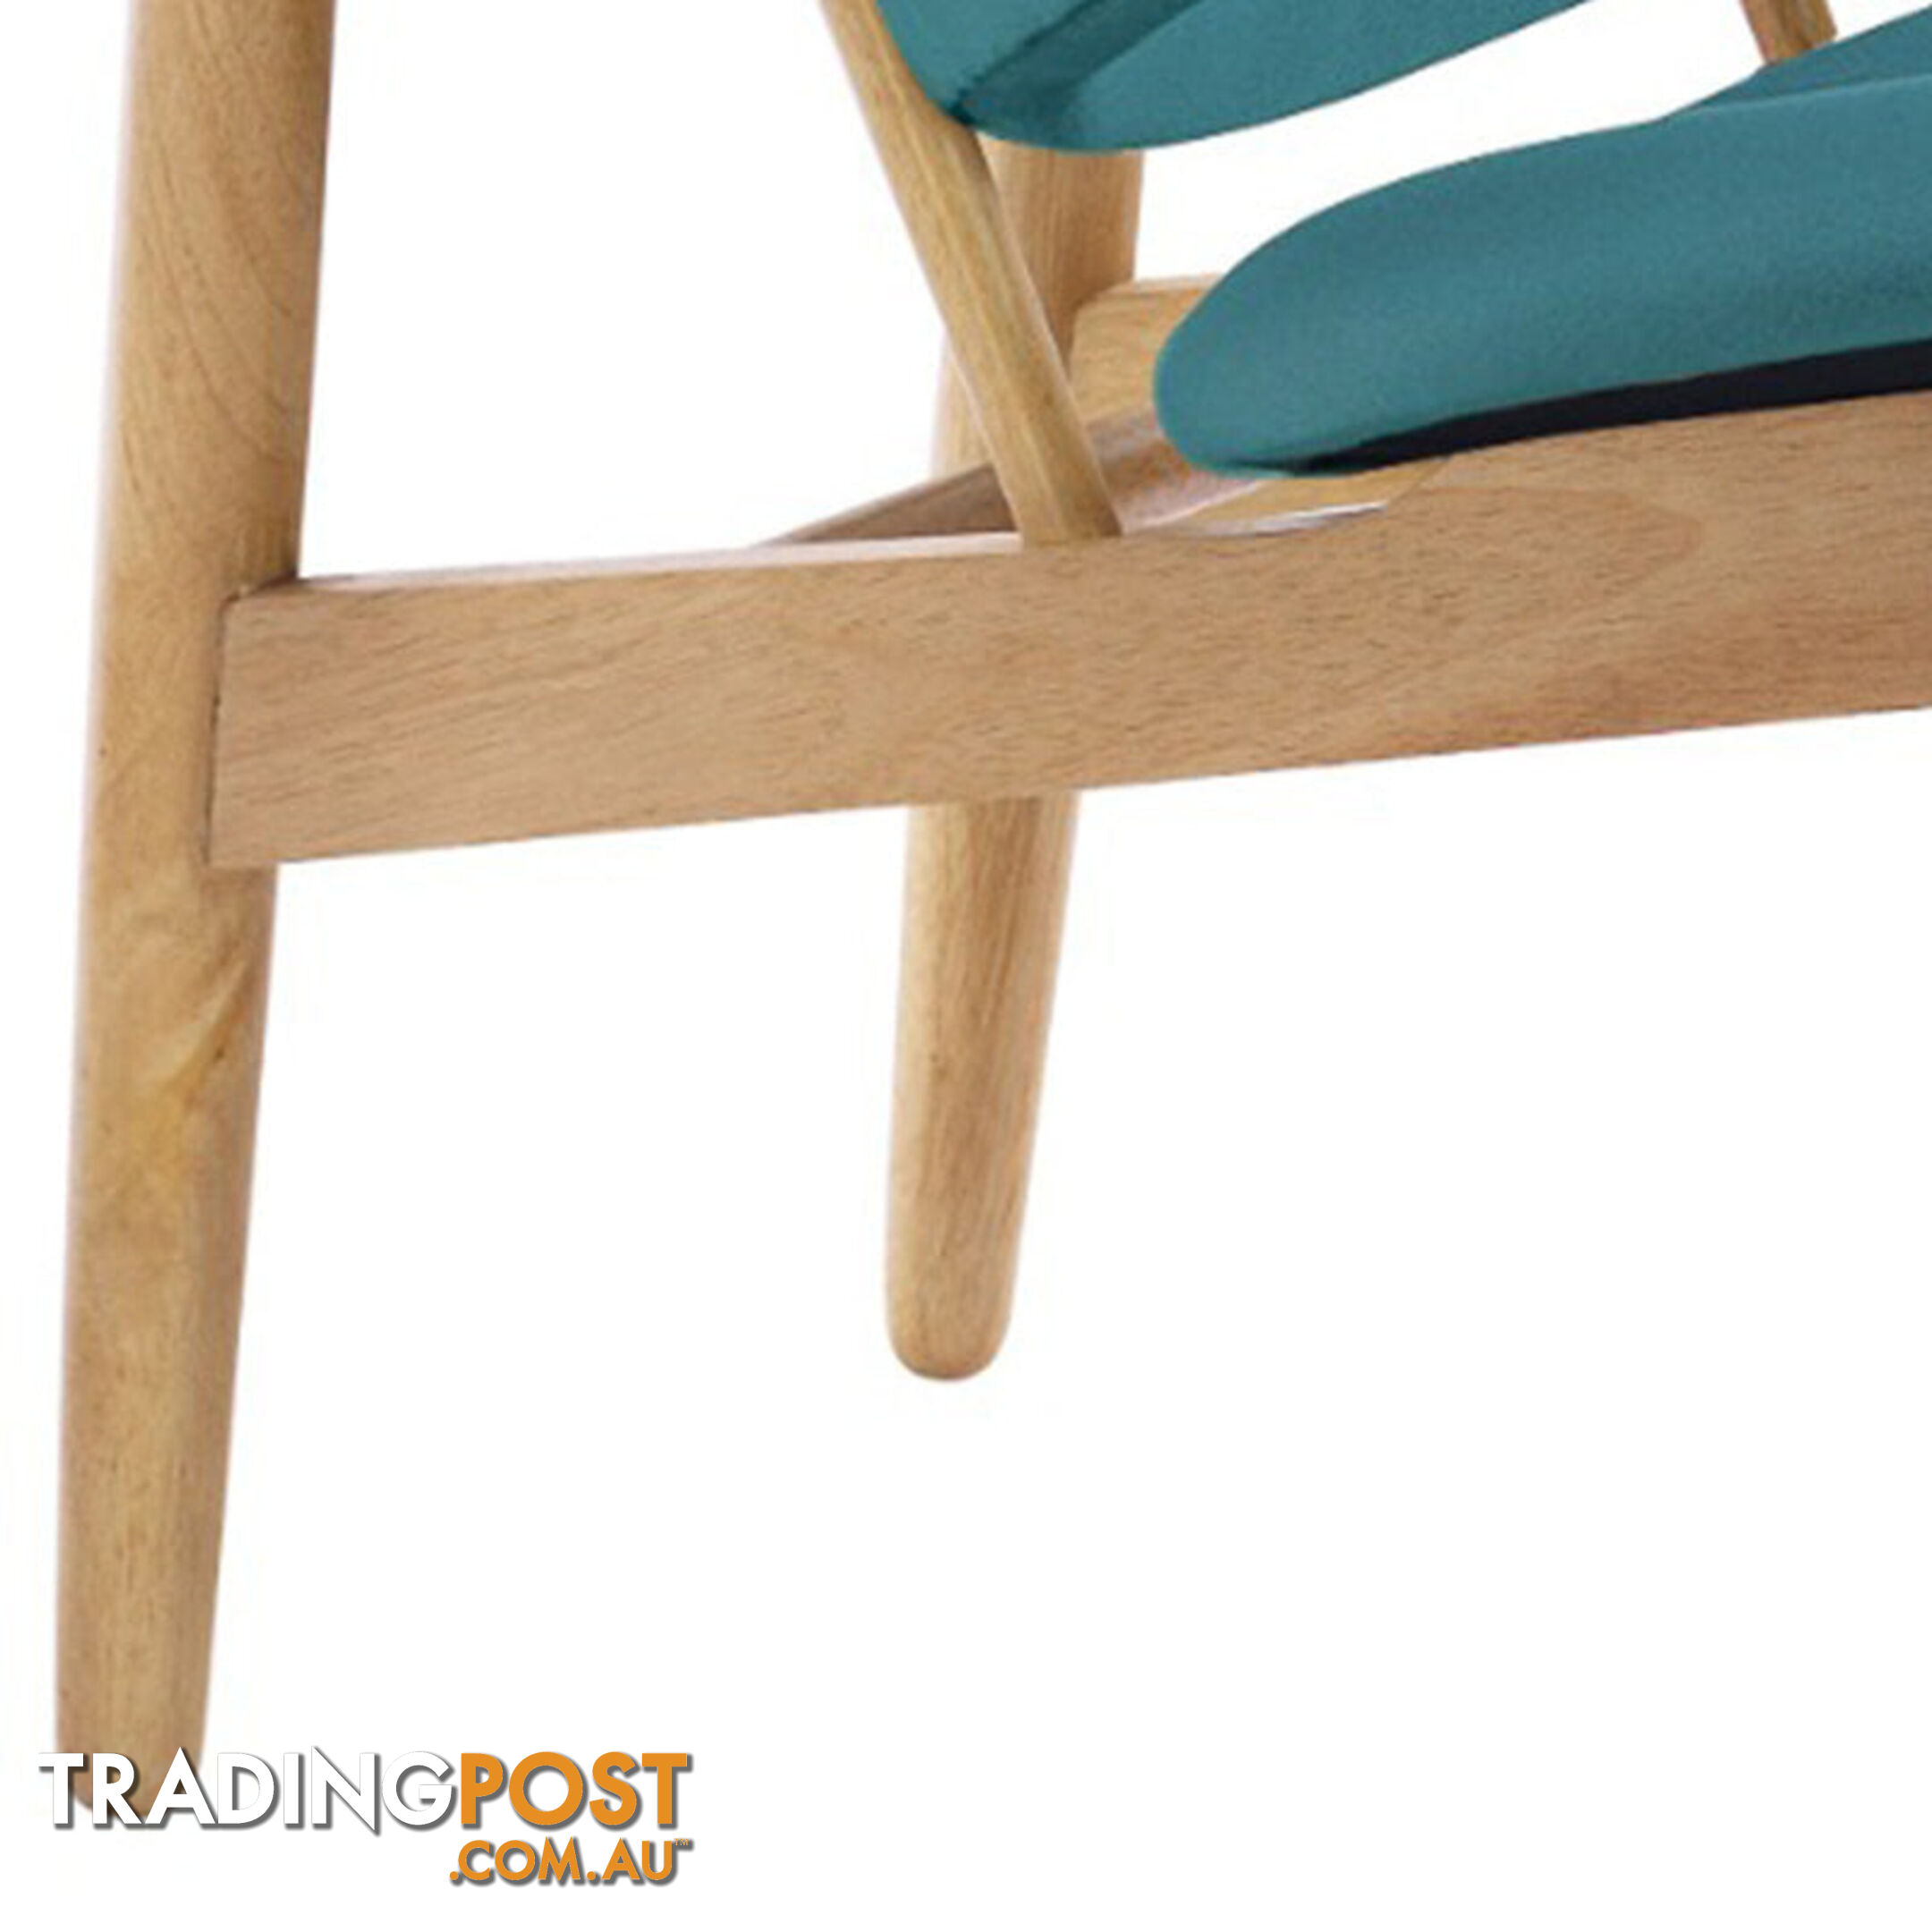 VERONIC Lounge Chair - Teal & Natural - VERONIC_103_733 - 9334719012315